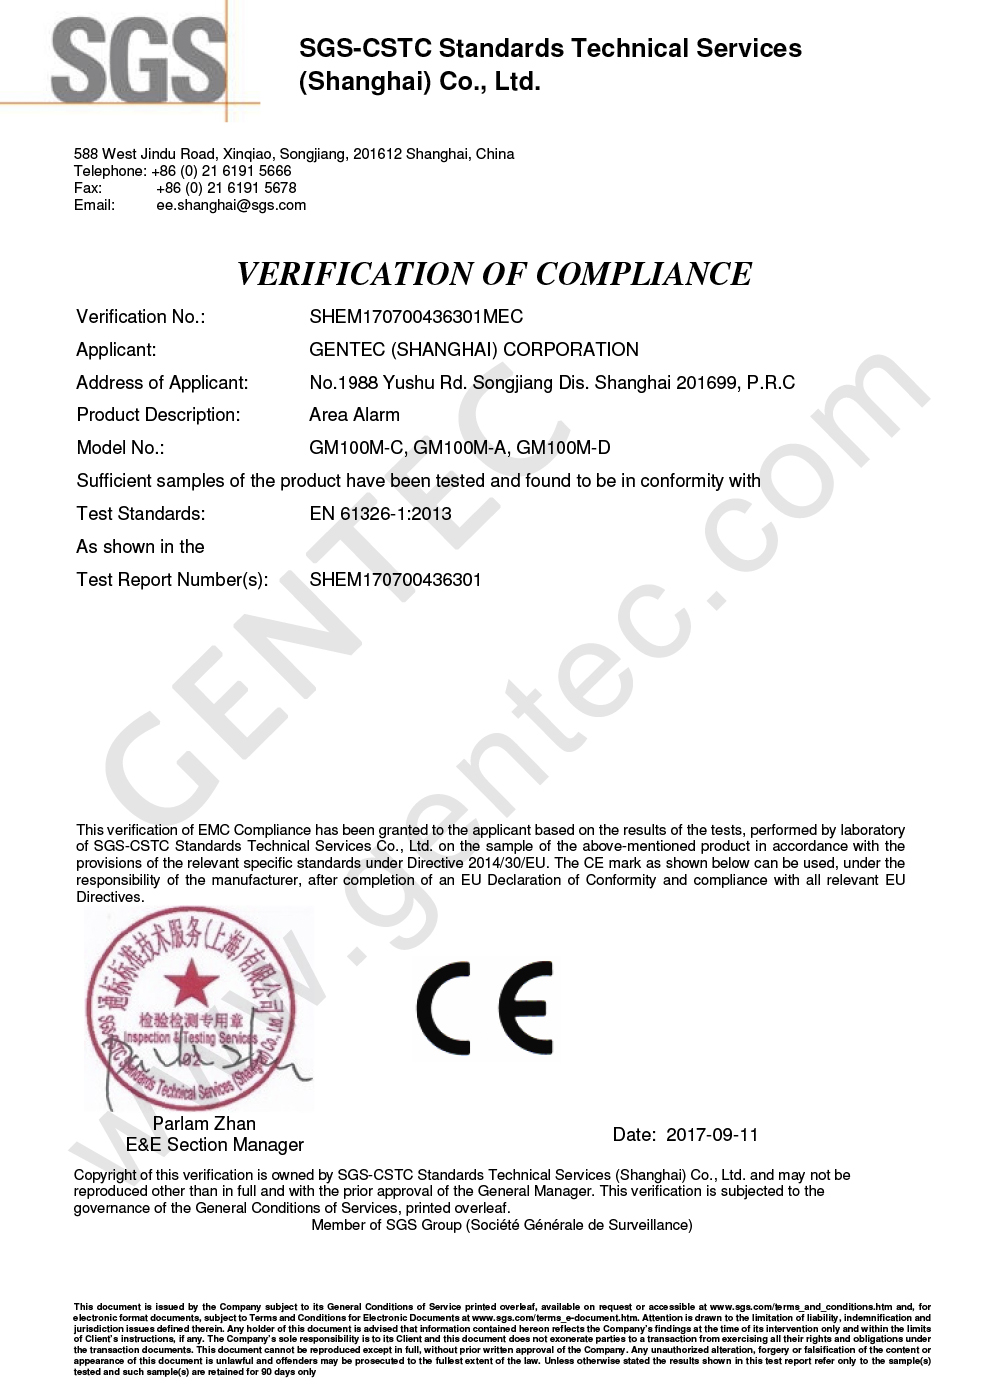 CE Certification (GM100M)